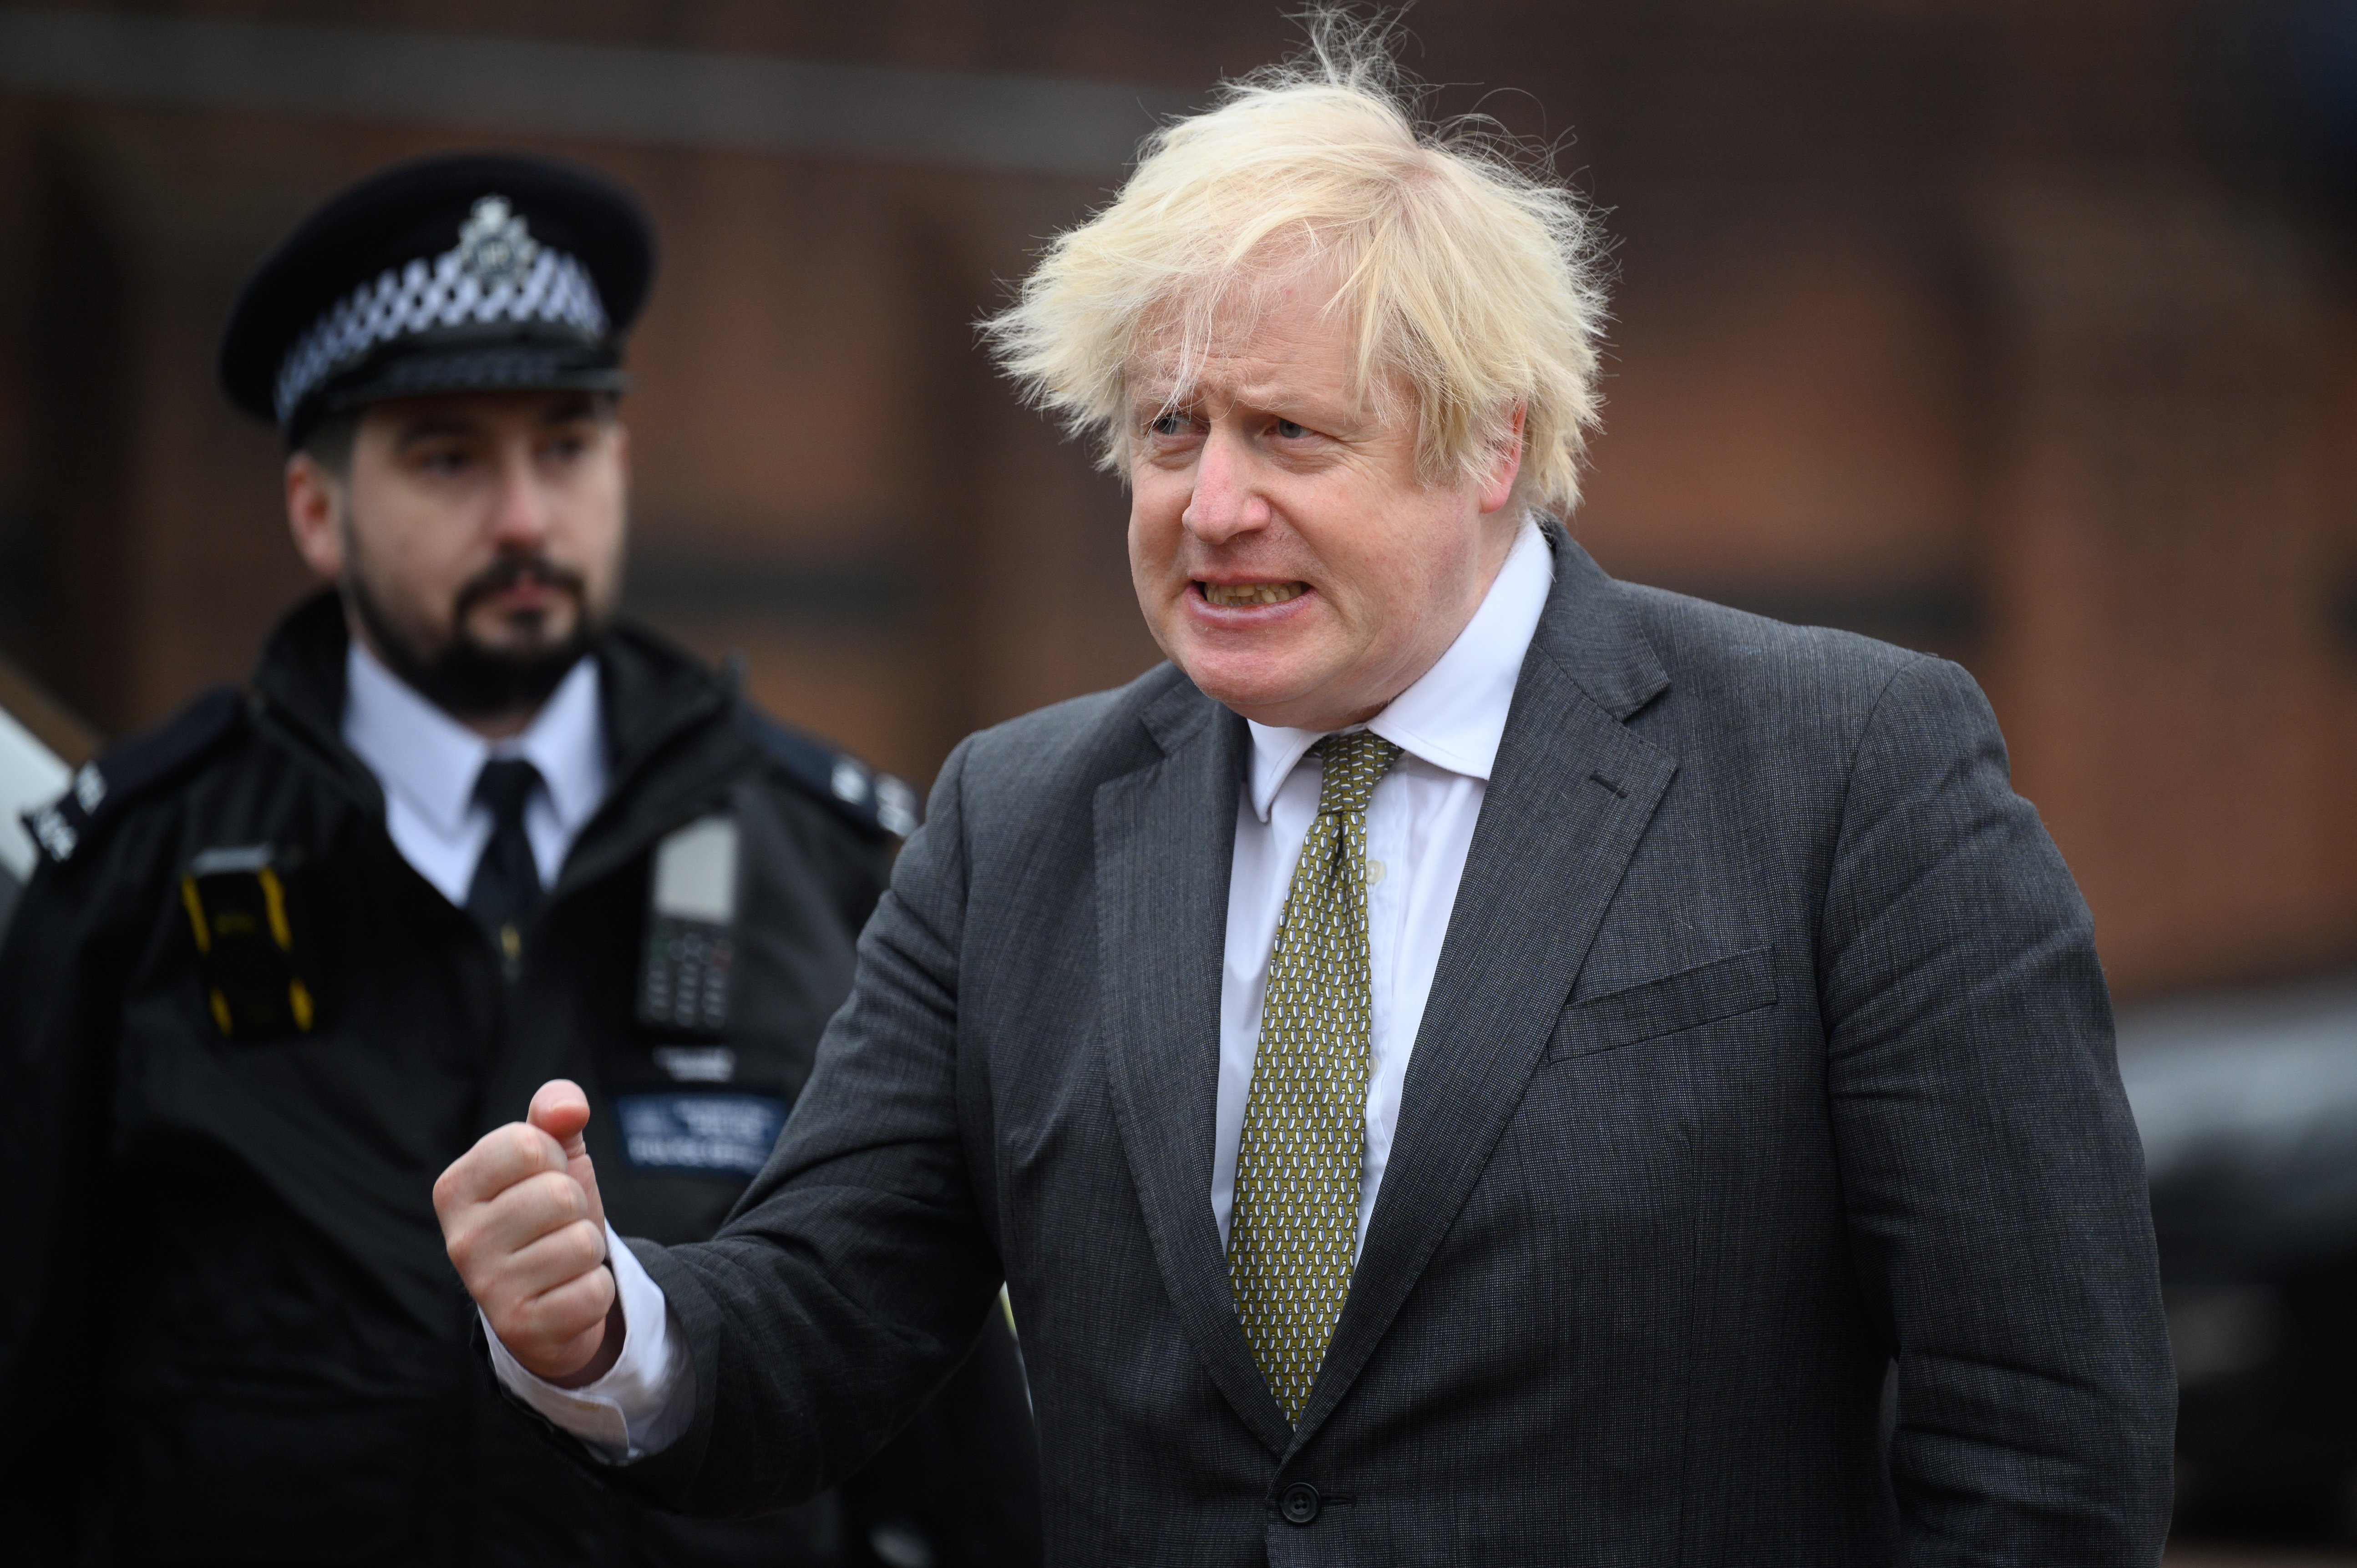 Prime Minister Boris Johnson Visits Uxbridge Constituency